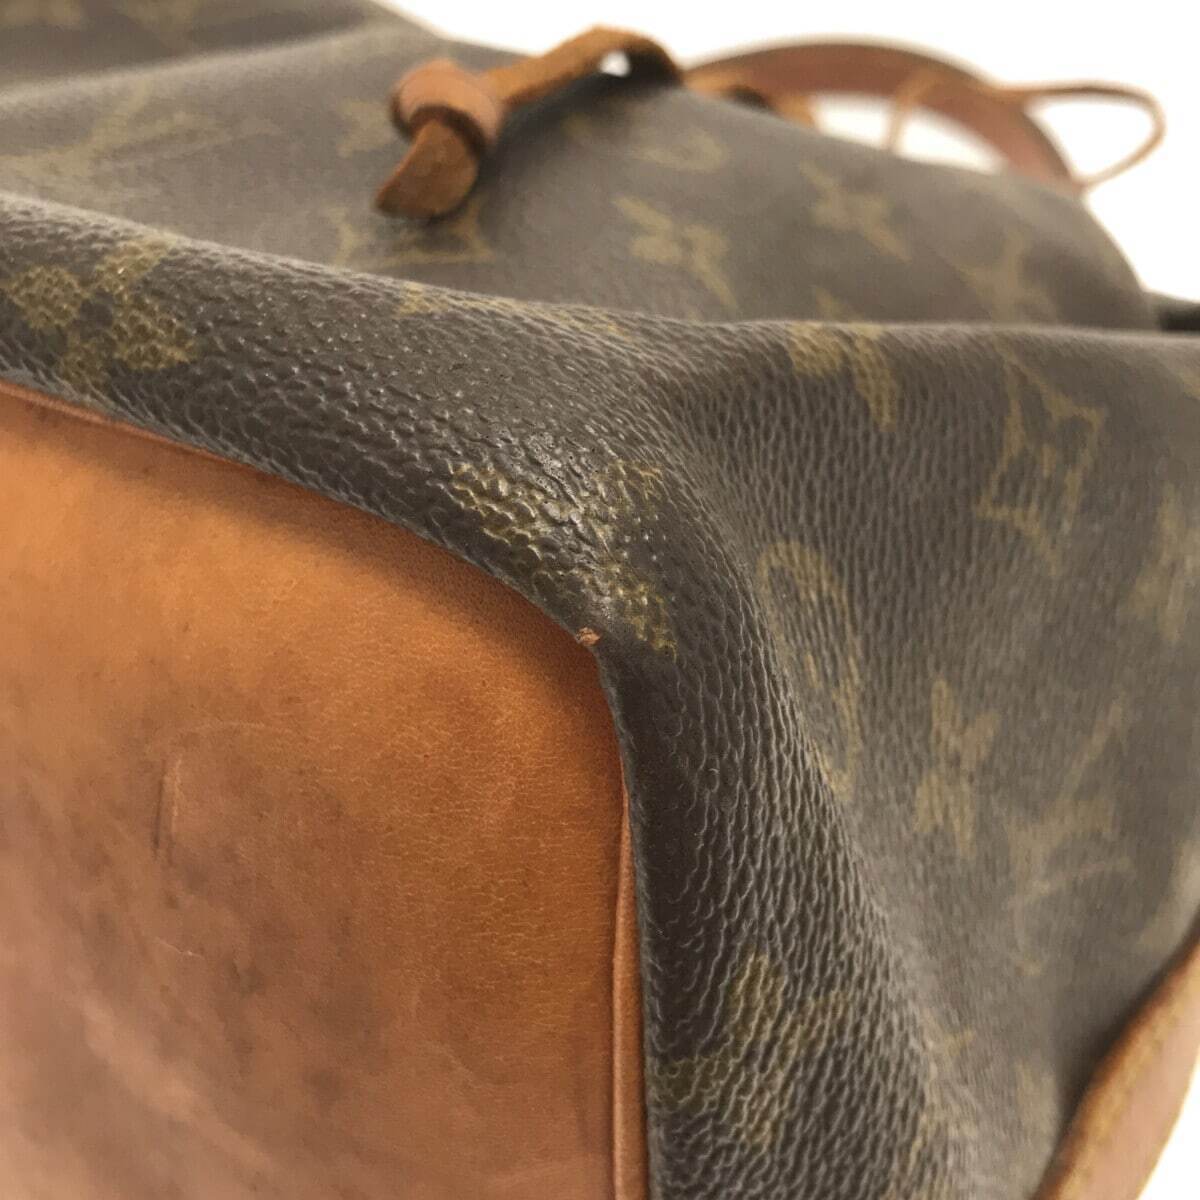 Louis Vuitton Malletier A Pars Empty LV wallet belt bag jewellery